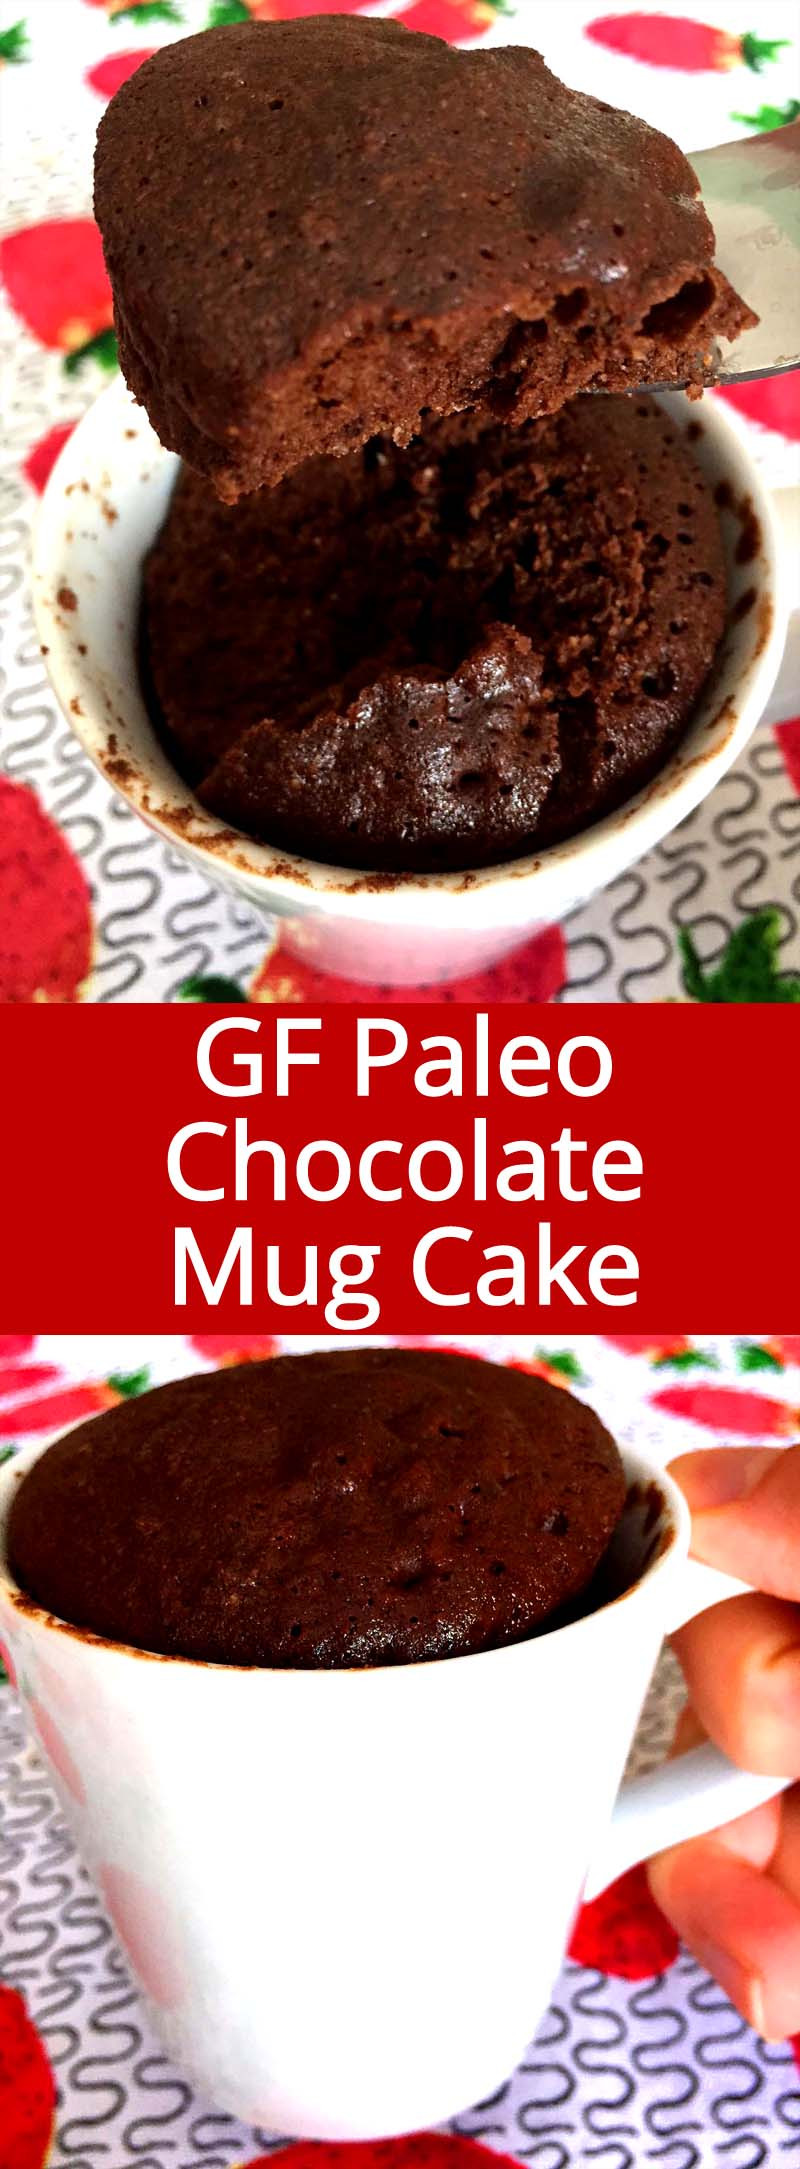 Healthy Mug Cake Recipes
 Healthy Chocolate Mug Cake Recipe Gluten Free Paleo